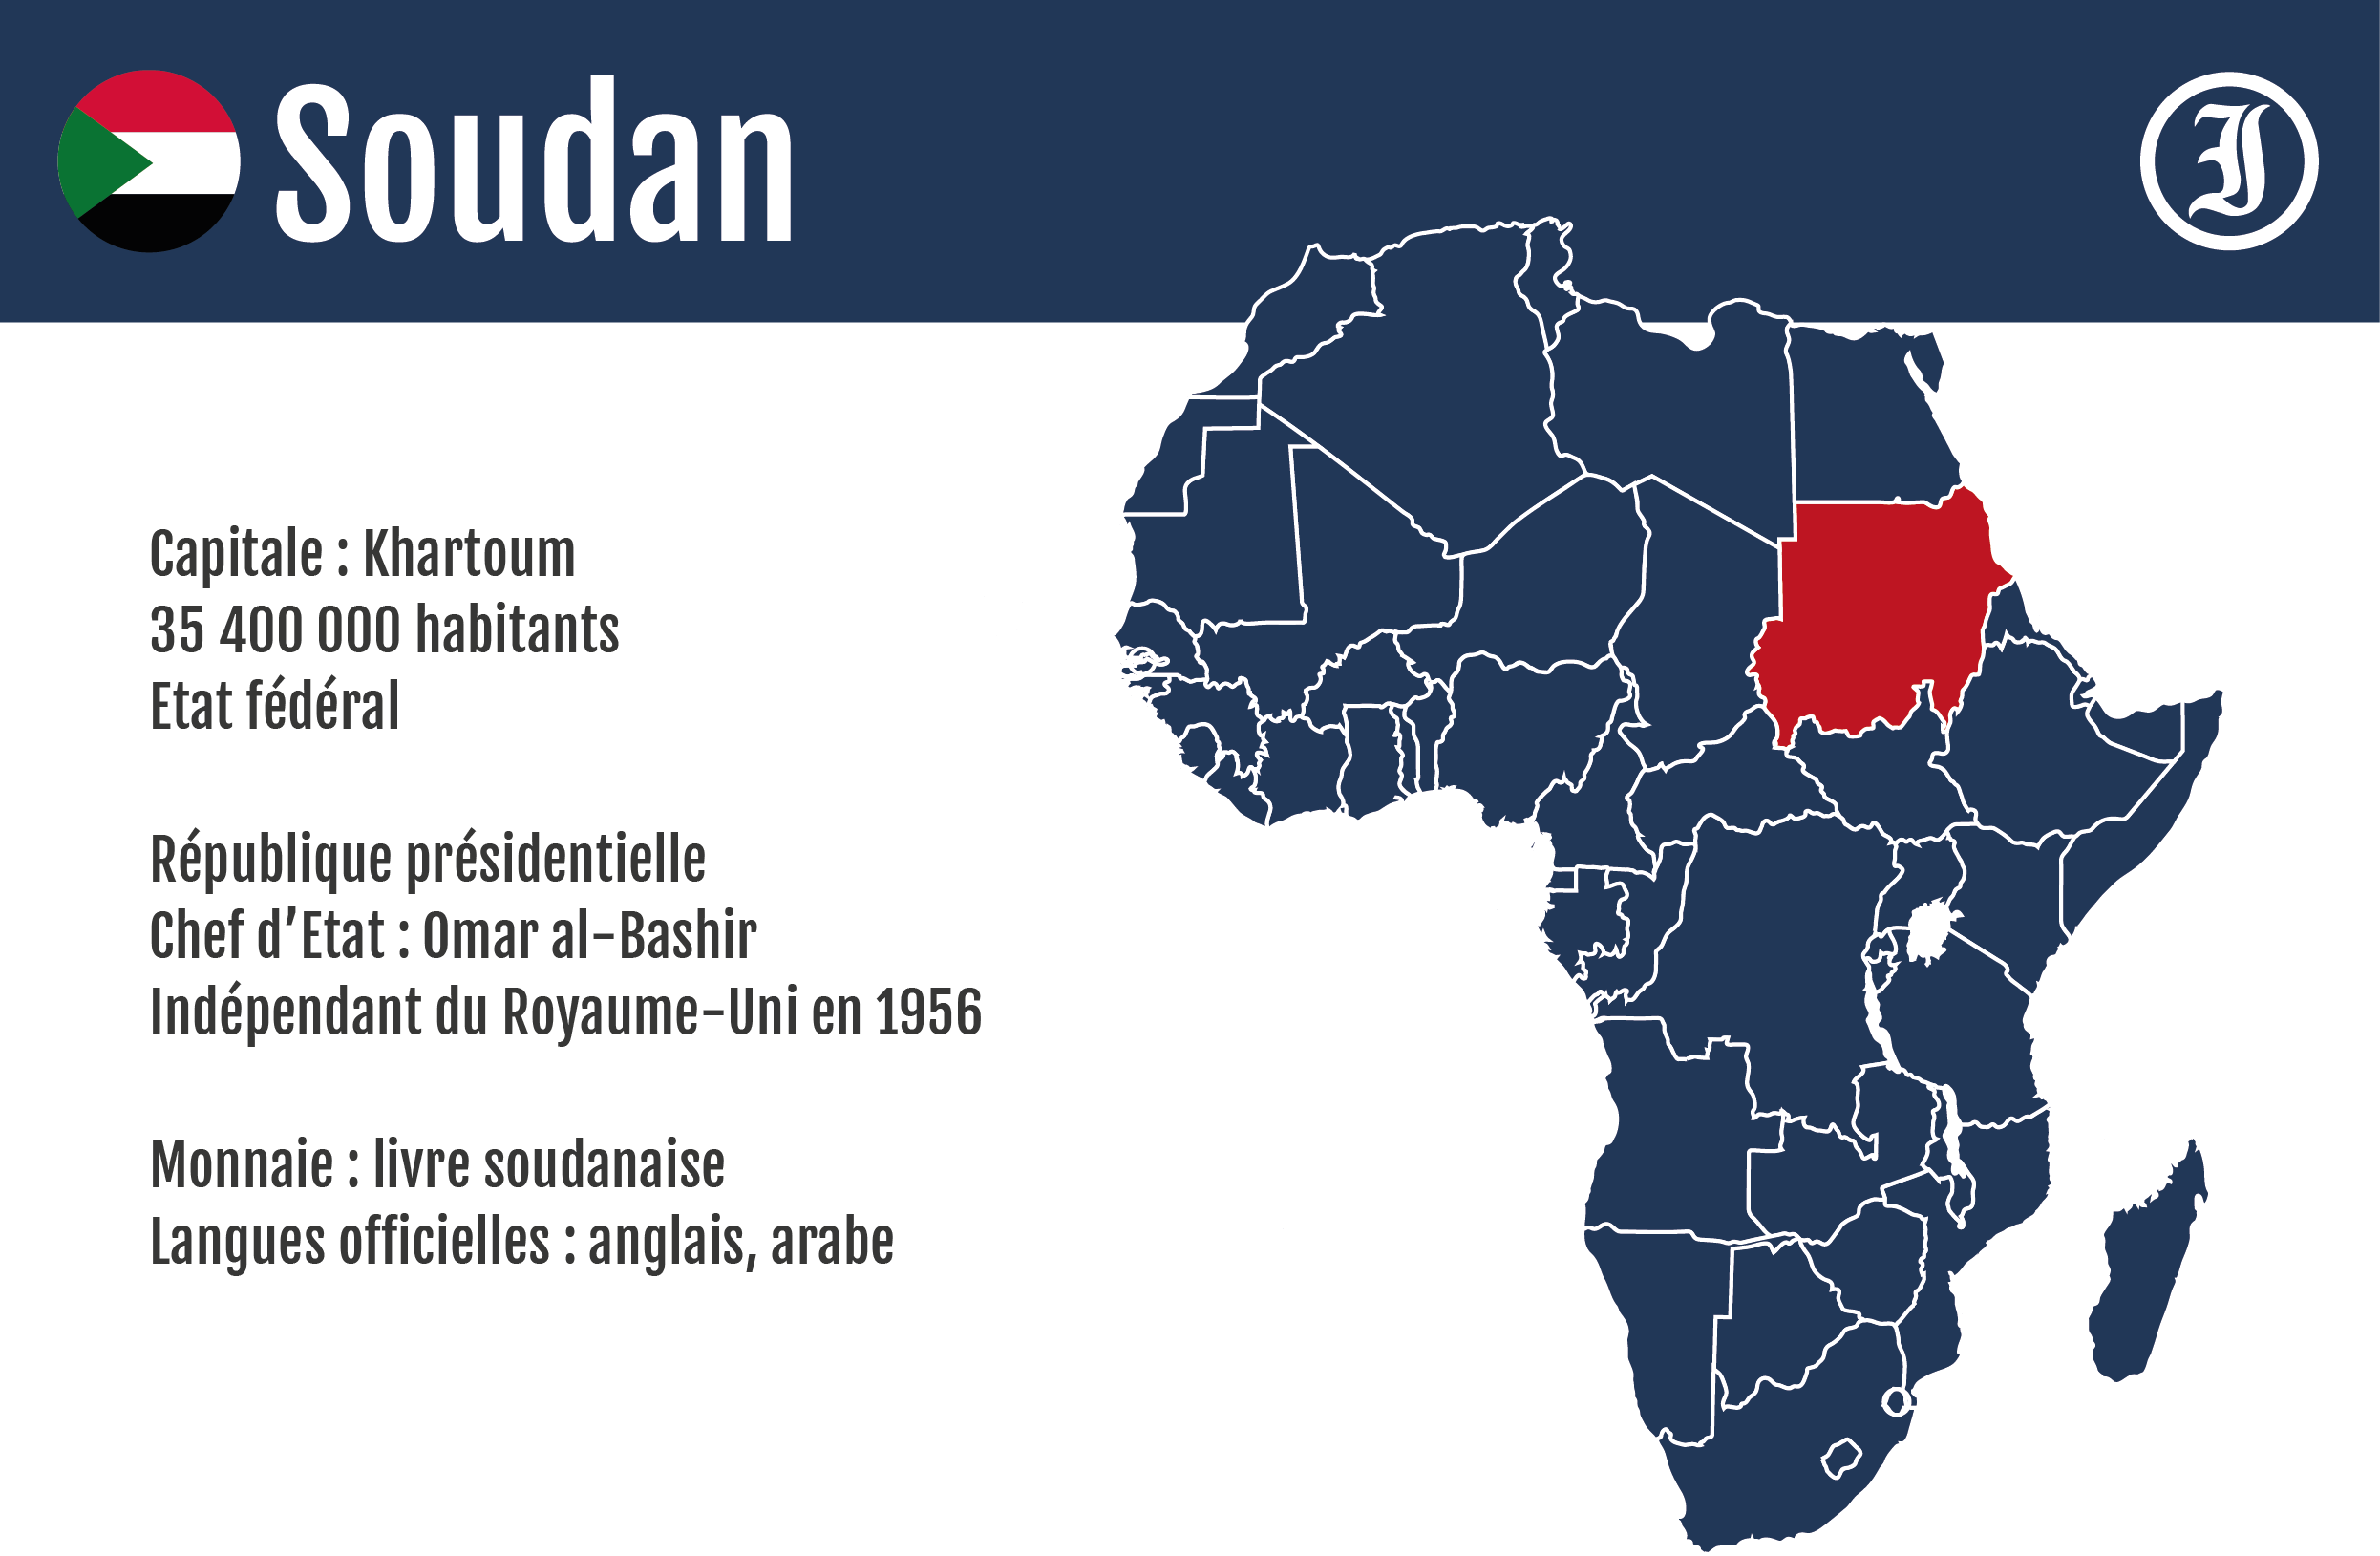 Soudan : des rebelles s'emparent d'urnes électorales